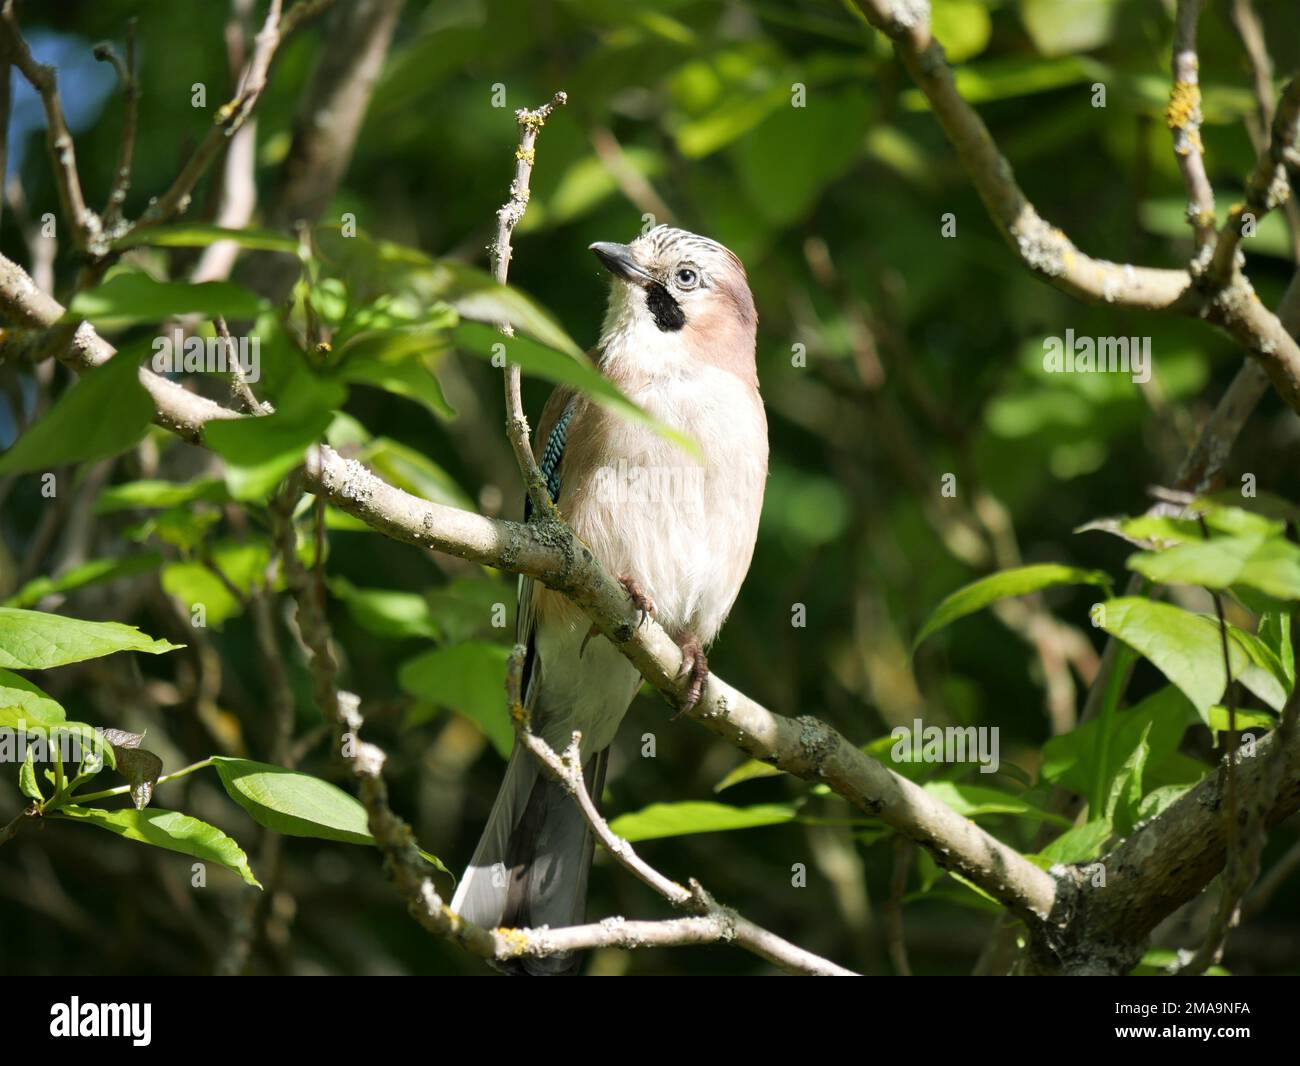 Jay - Garrulus Glandarius Perched on a branch in a garden Stock Photo